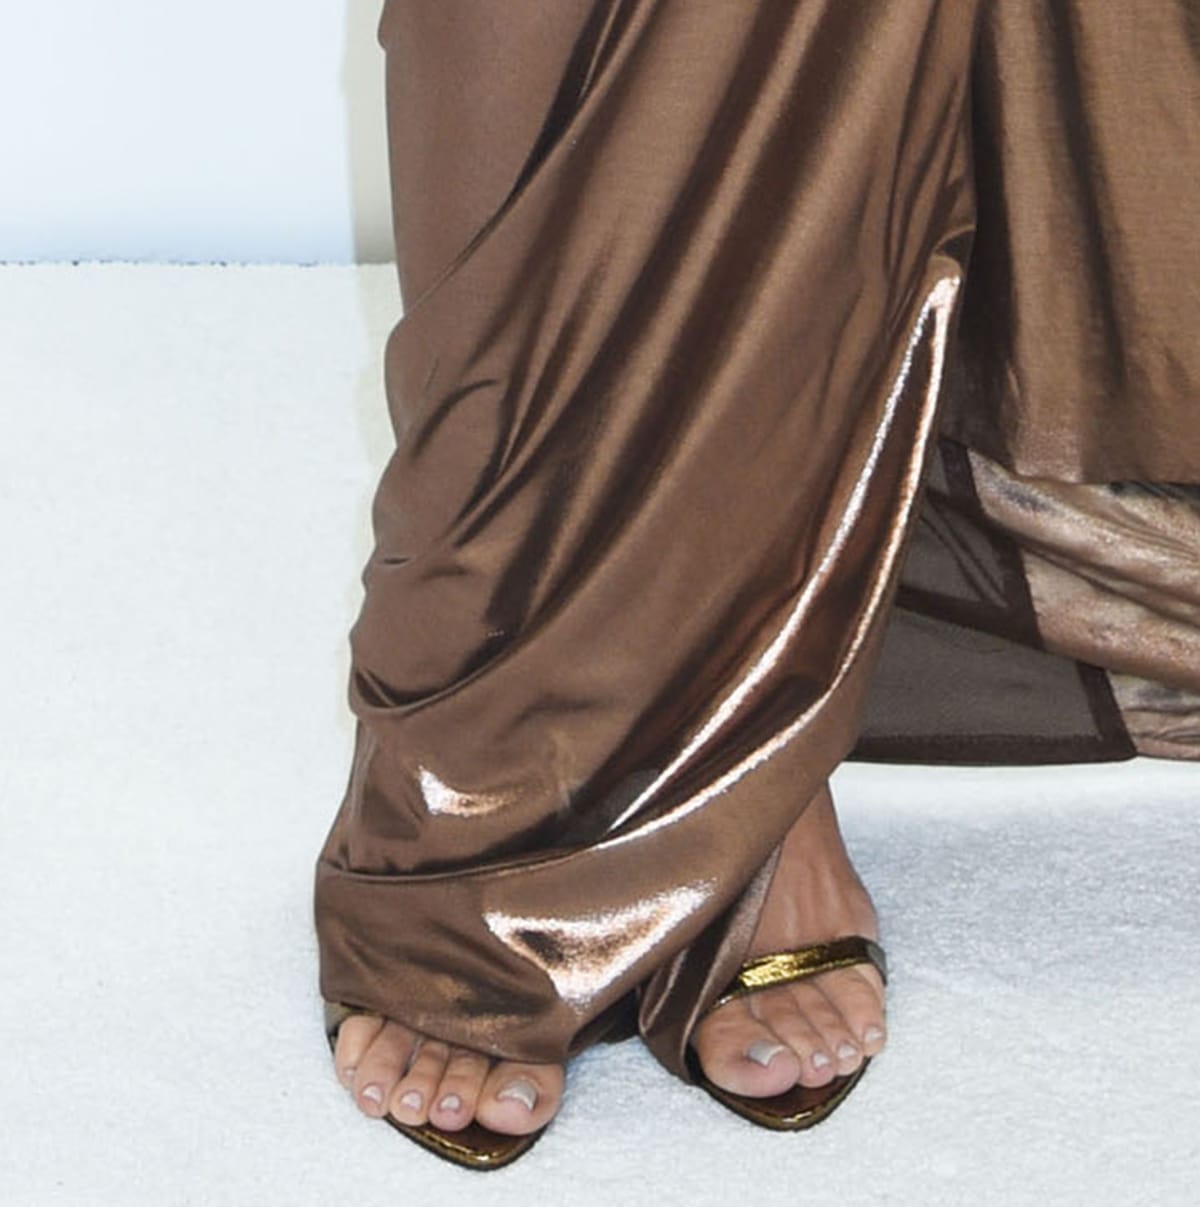 Khloe Kardashian shows off her pedicured feet in gold Tom Ford heels